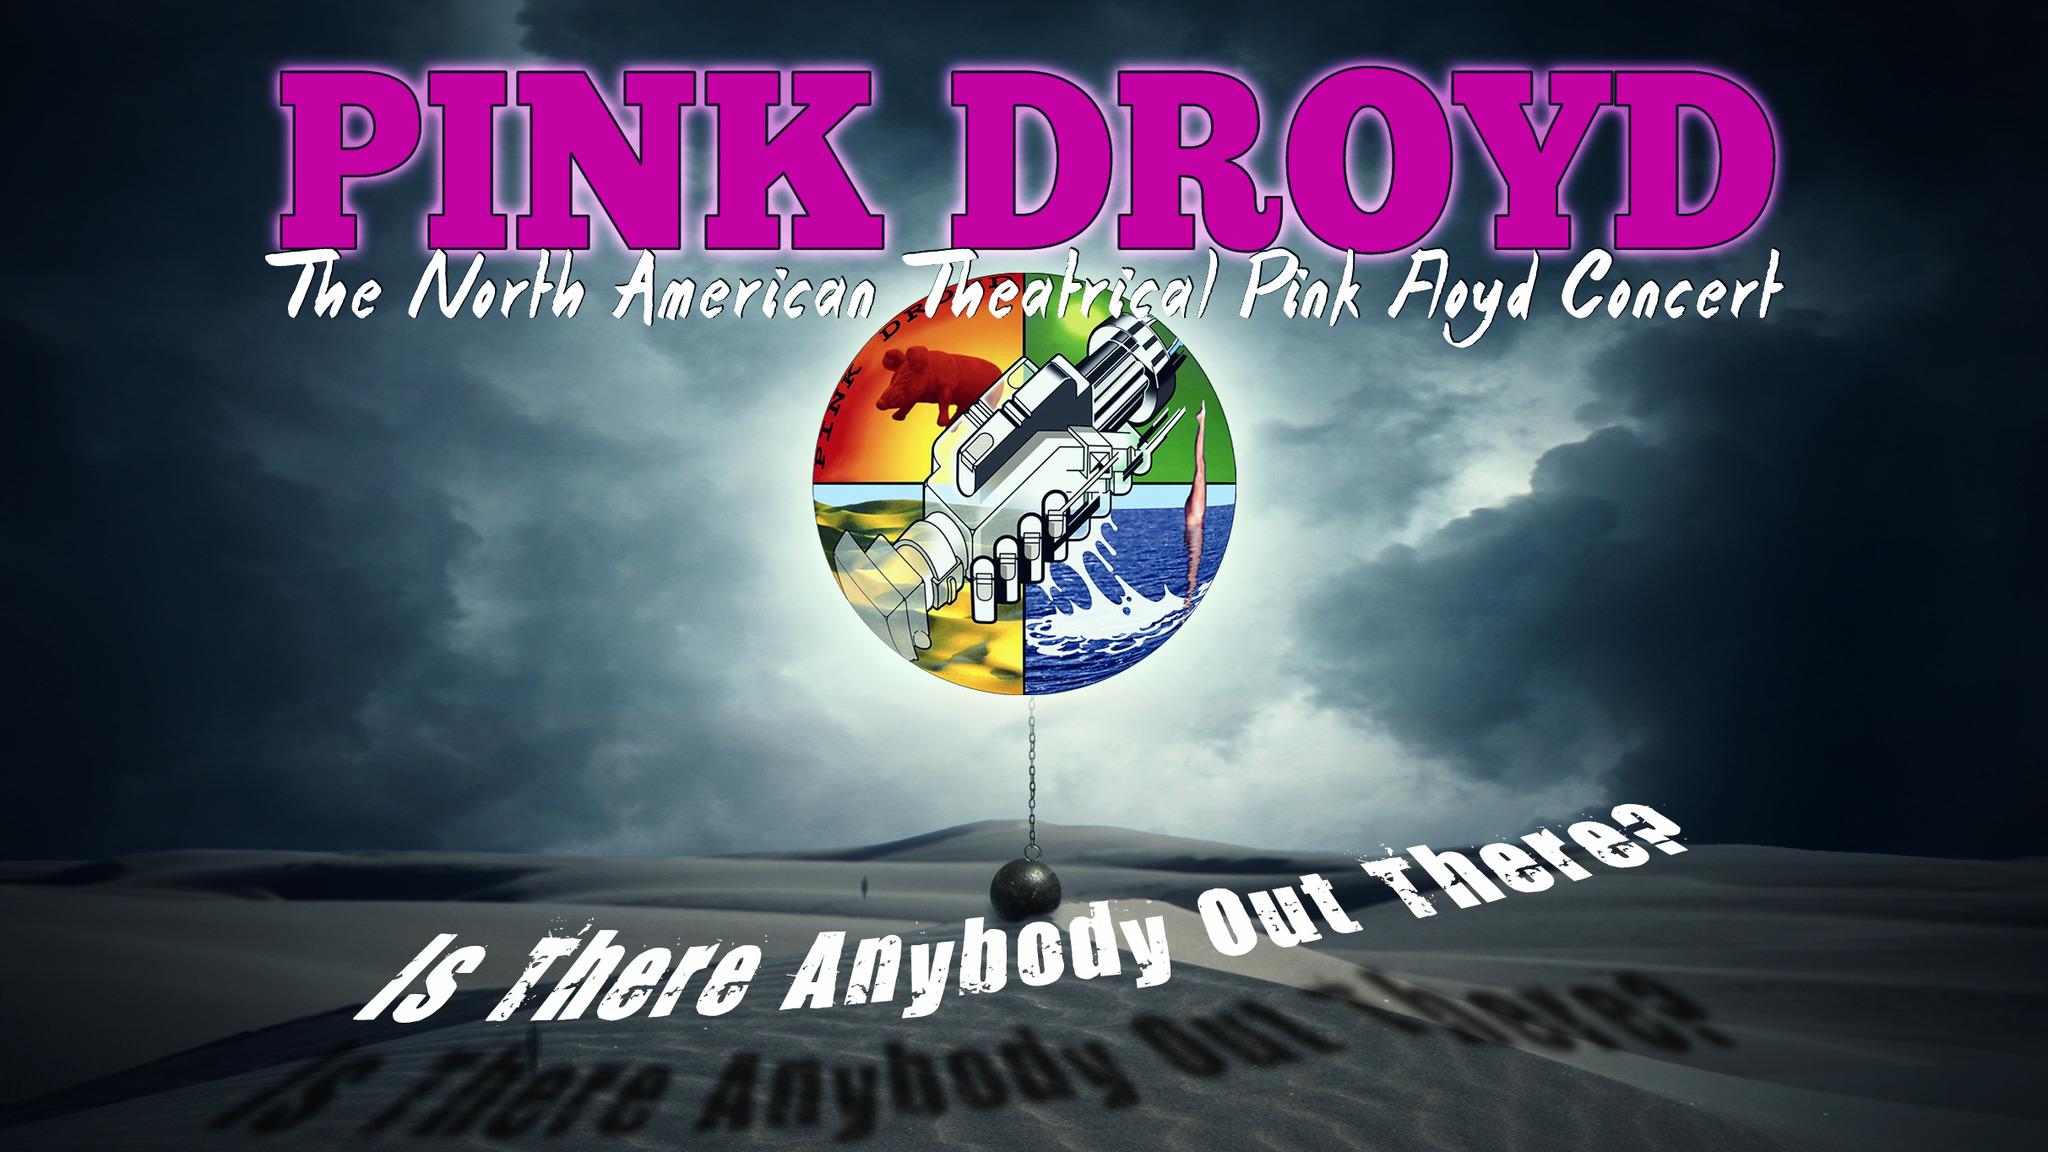 Pink Droyd